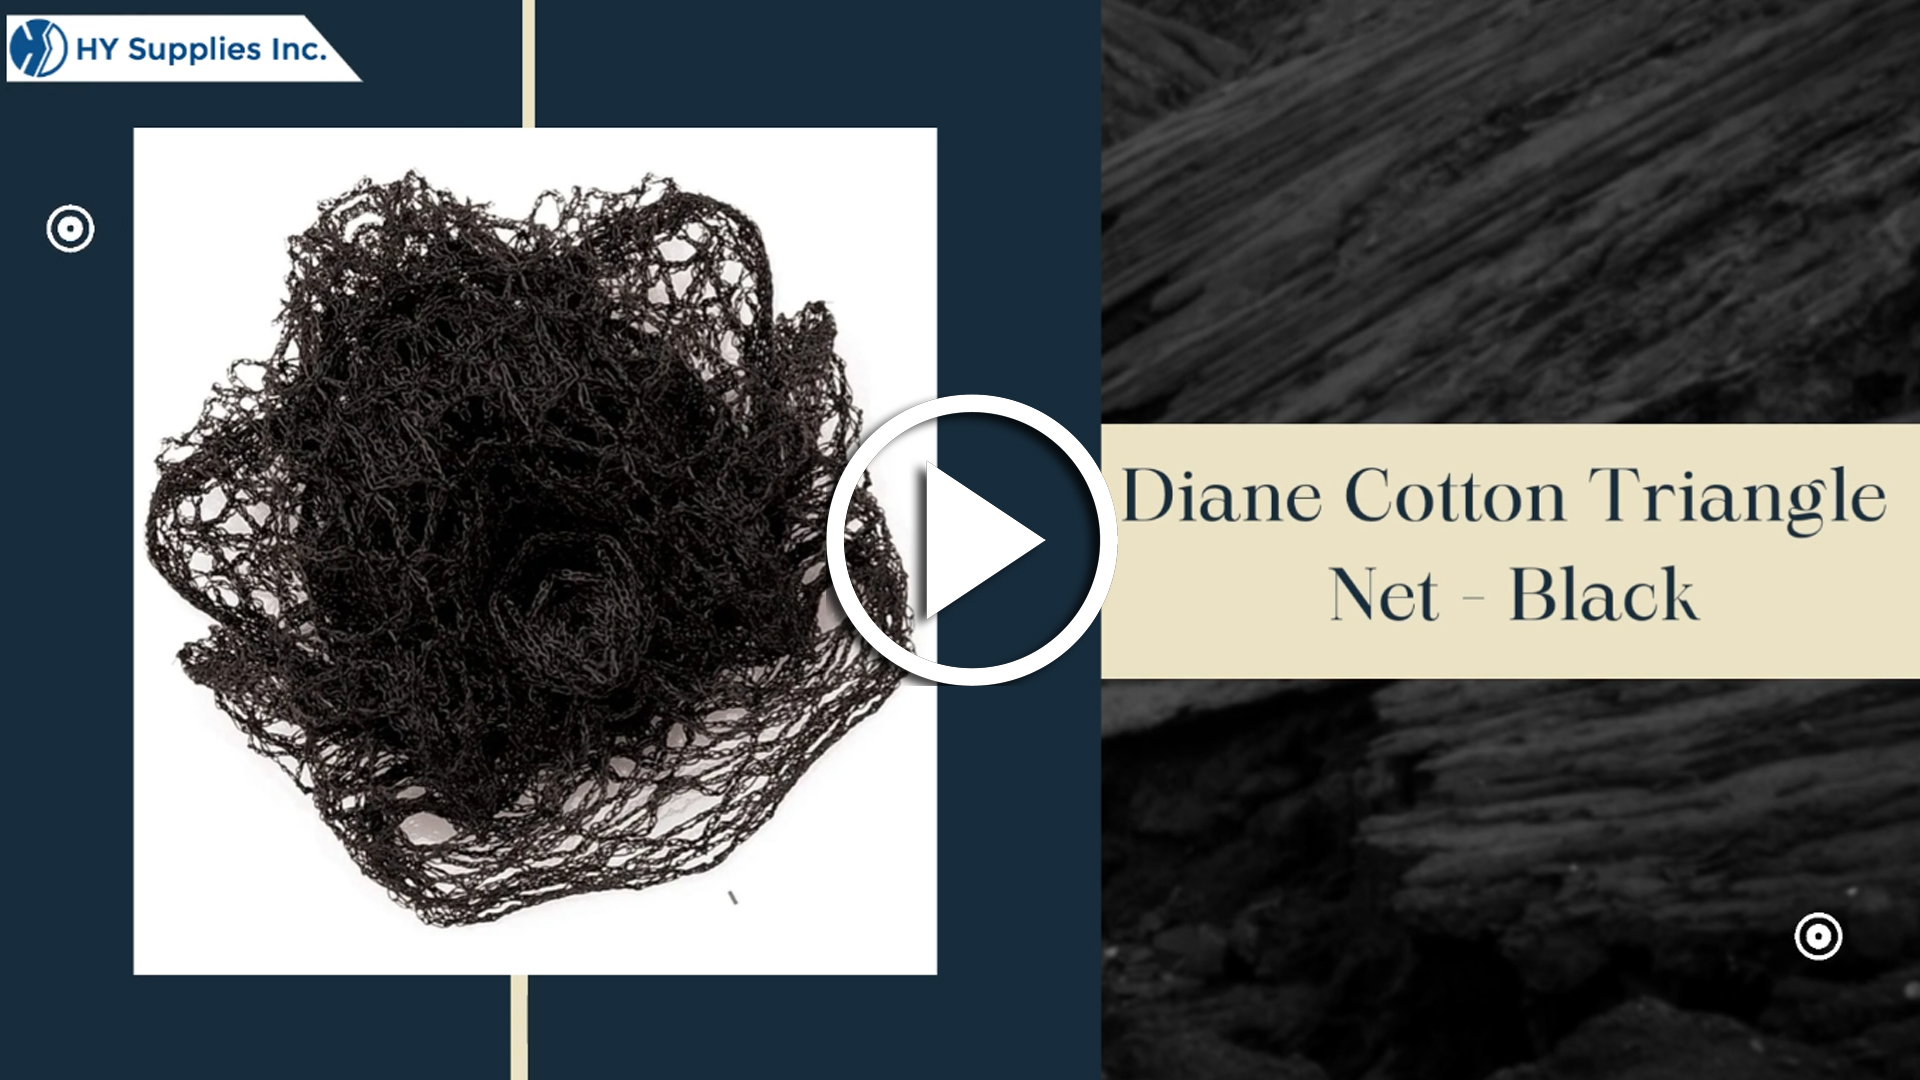 Diane Cotton Triangle Net - Black